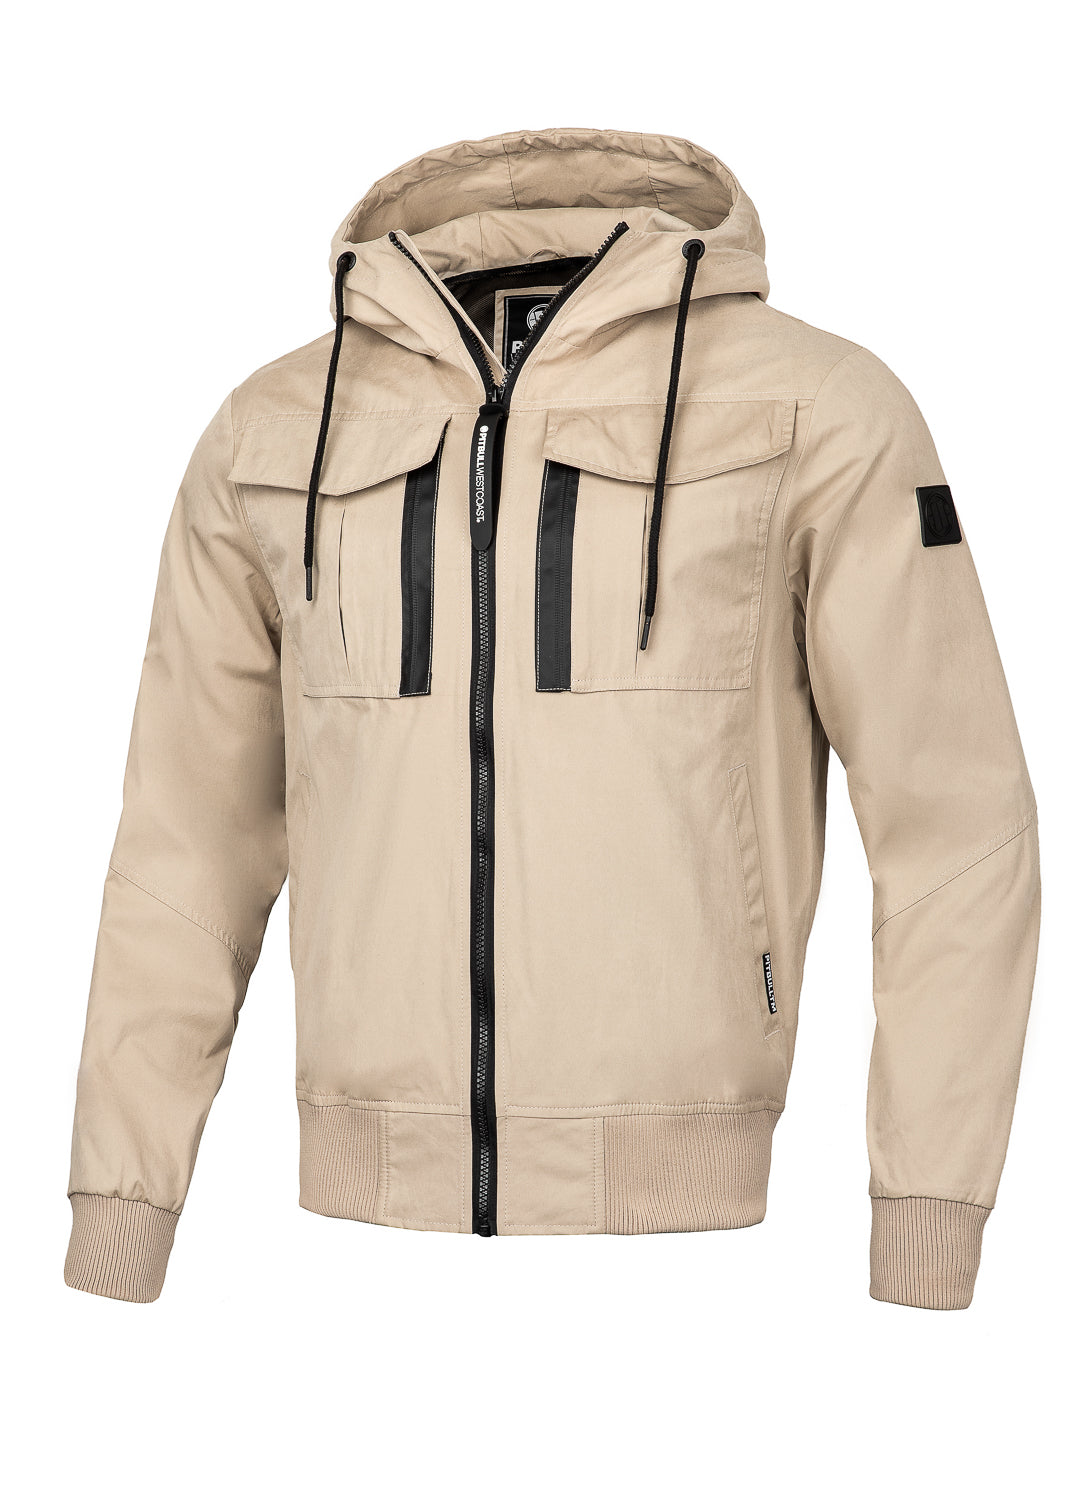 Hooded Jacket ARILLO Sand - Pitbull West Coast International Store 